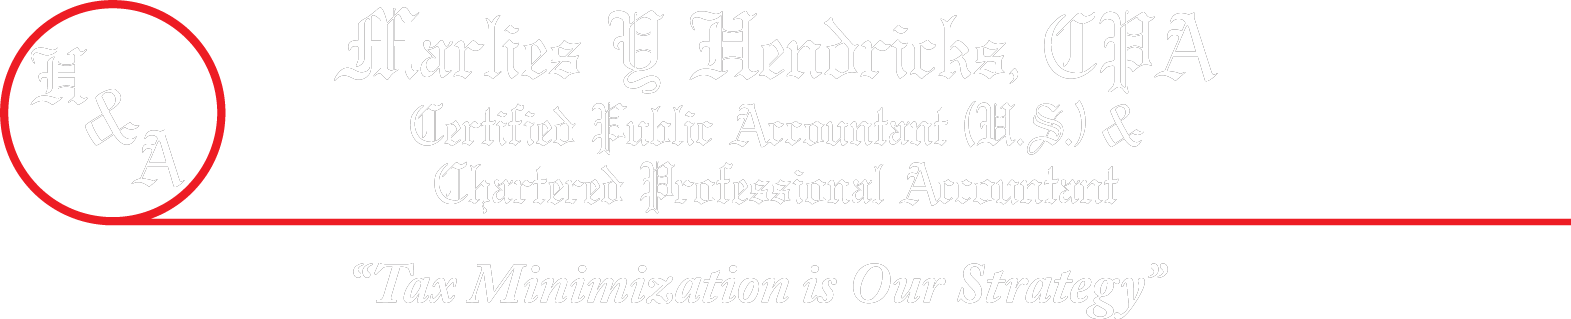 Hendricks & Associate, CPAs